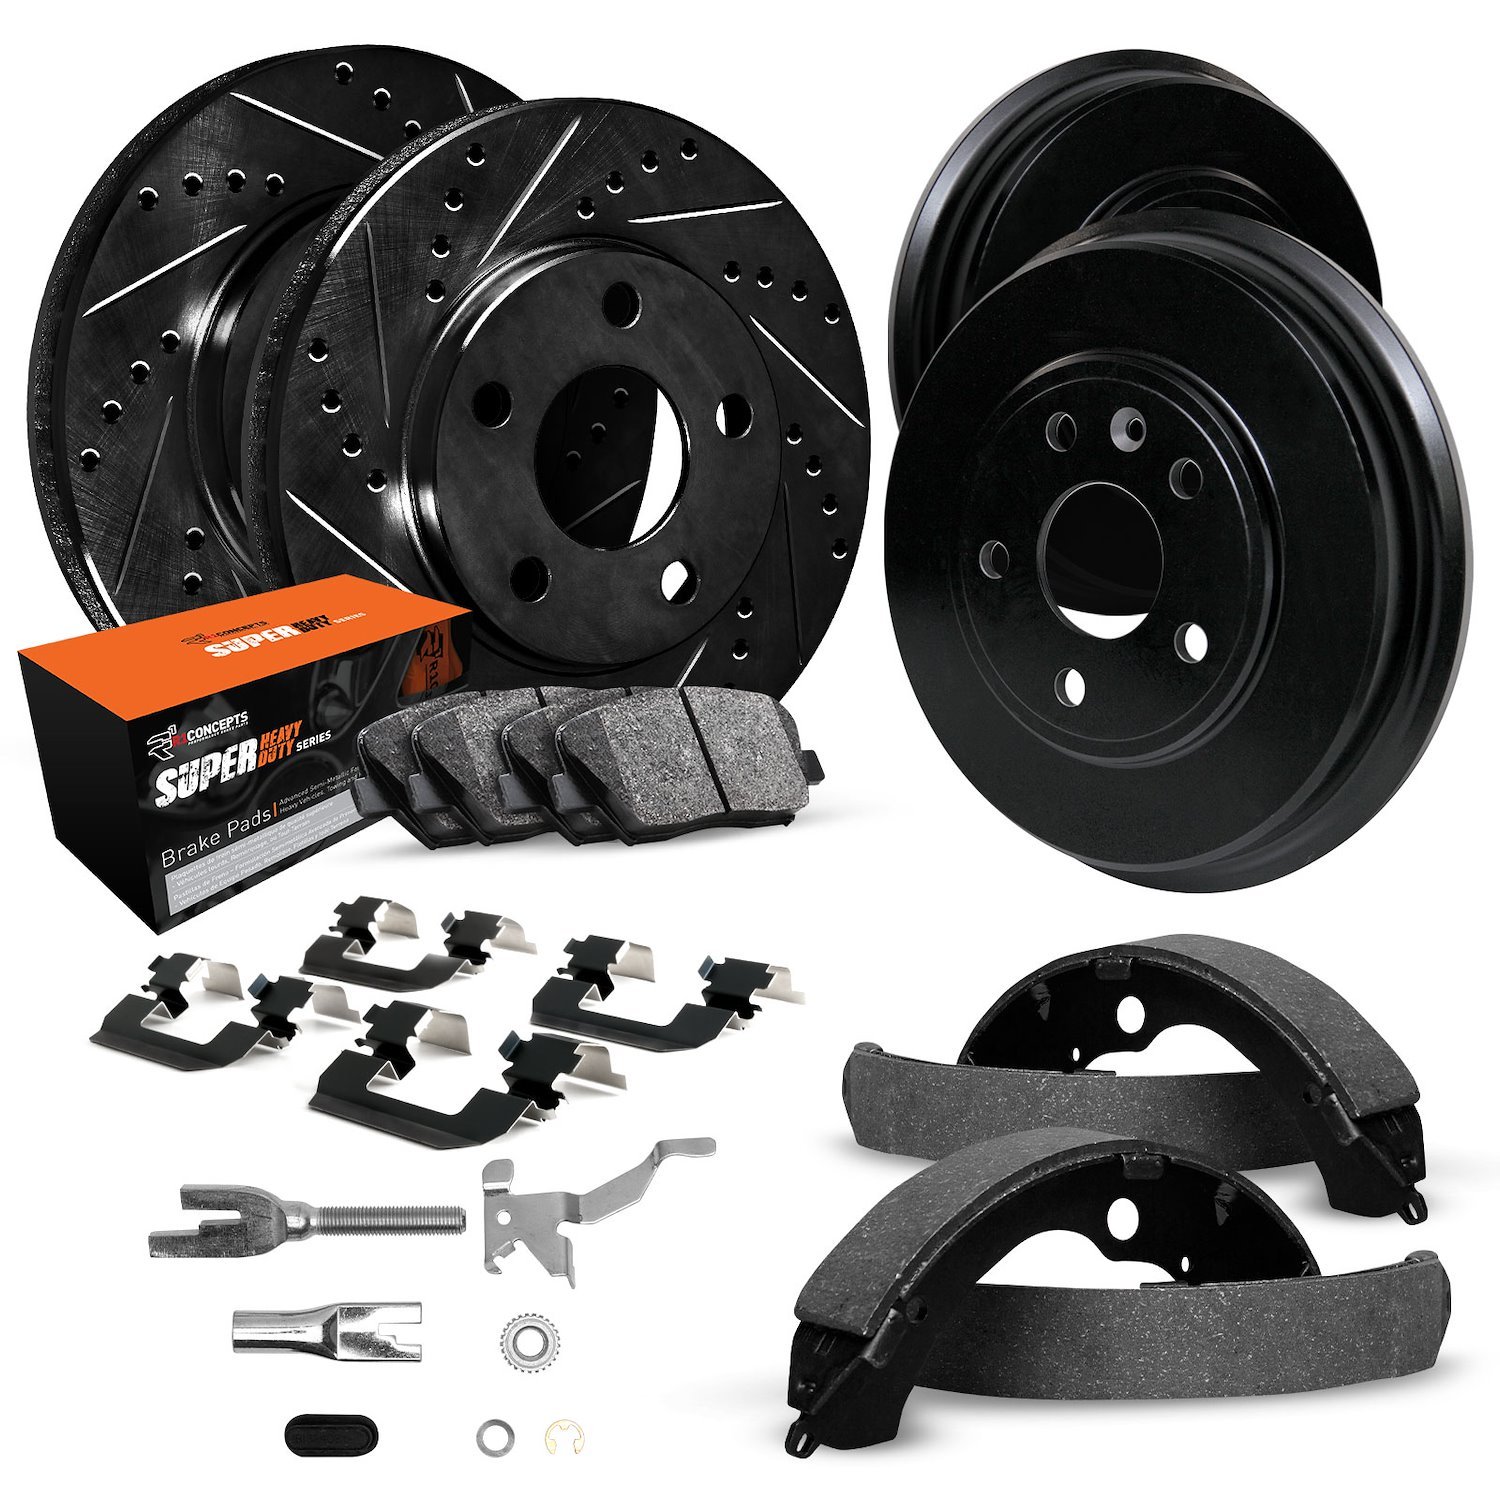 E-Line Slotted Black Brake Rotor & Drum Set w/Super-Duty Pads, Shoes, Hardware/Adjusters, 2008-2013 GM, Position: Front & Rear